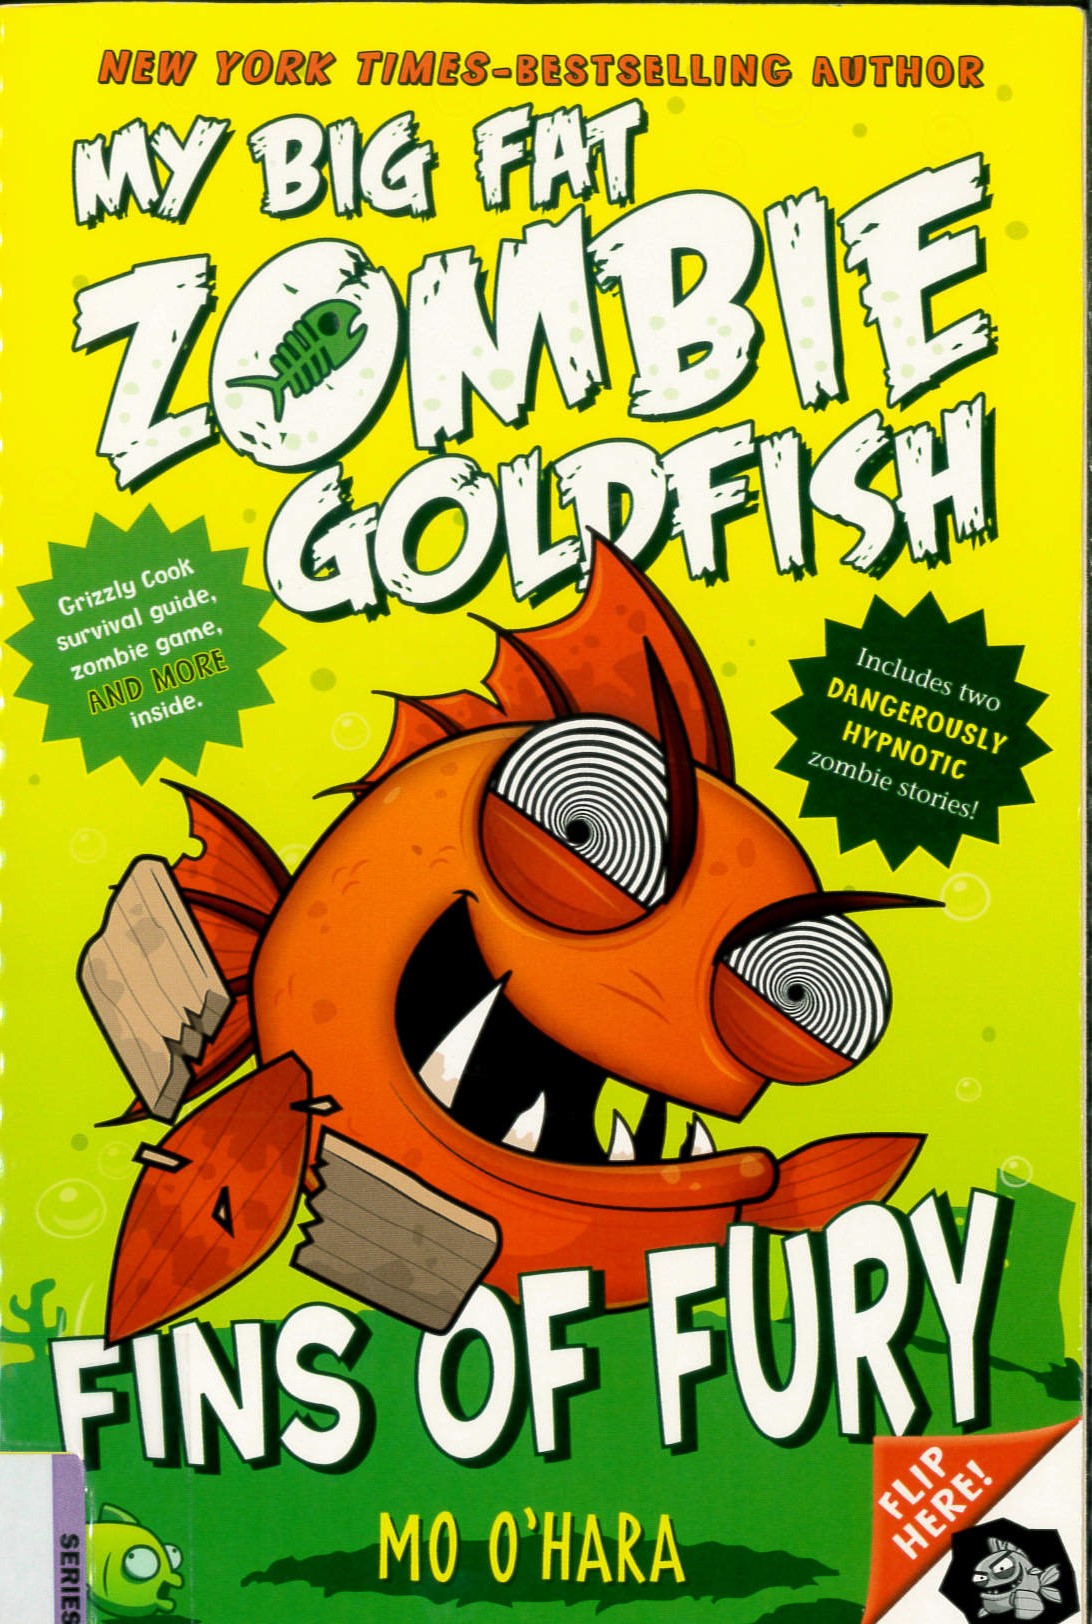 My big fat zombie goldfish : fins of fury /